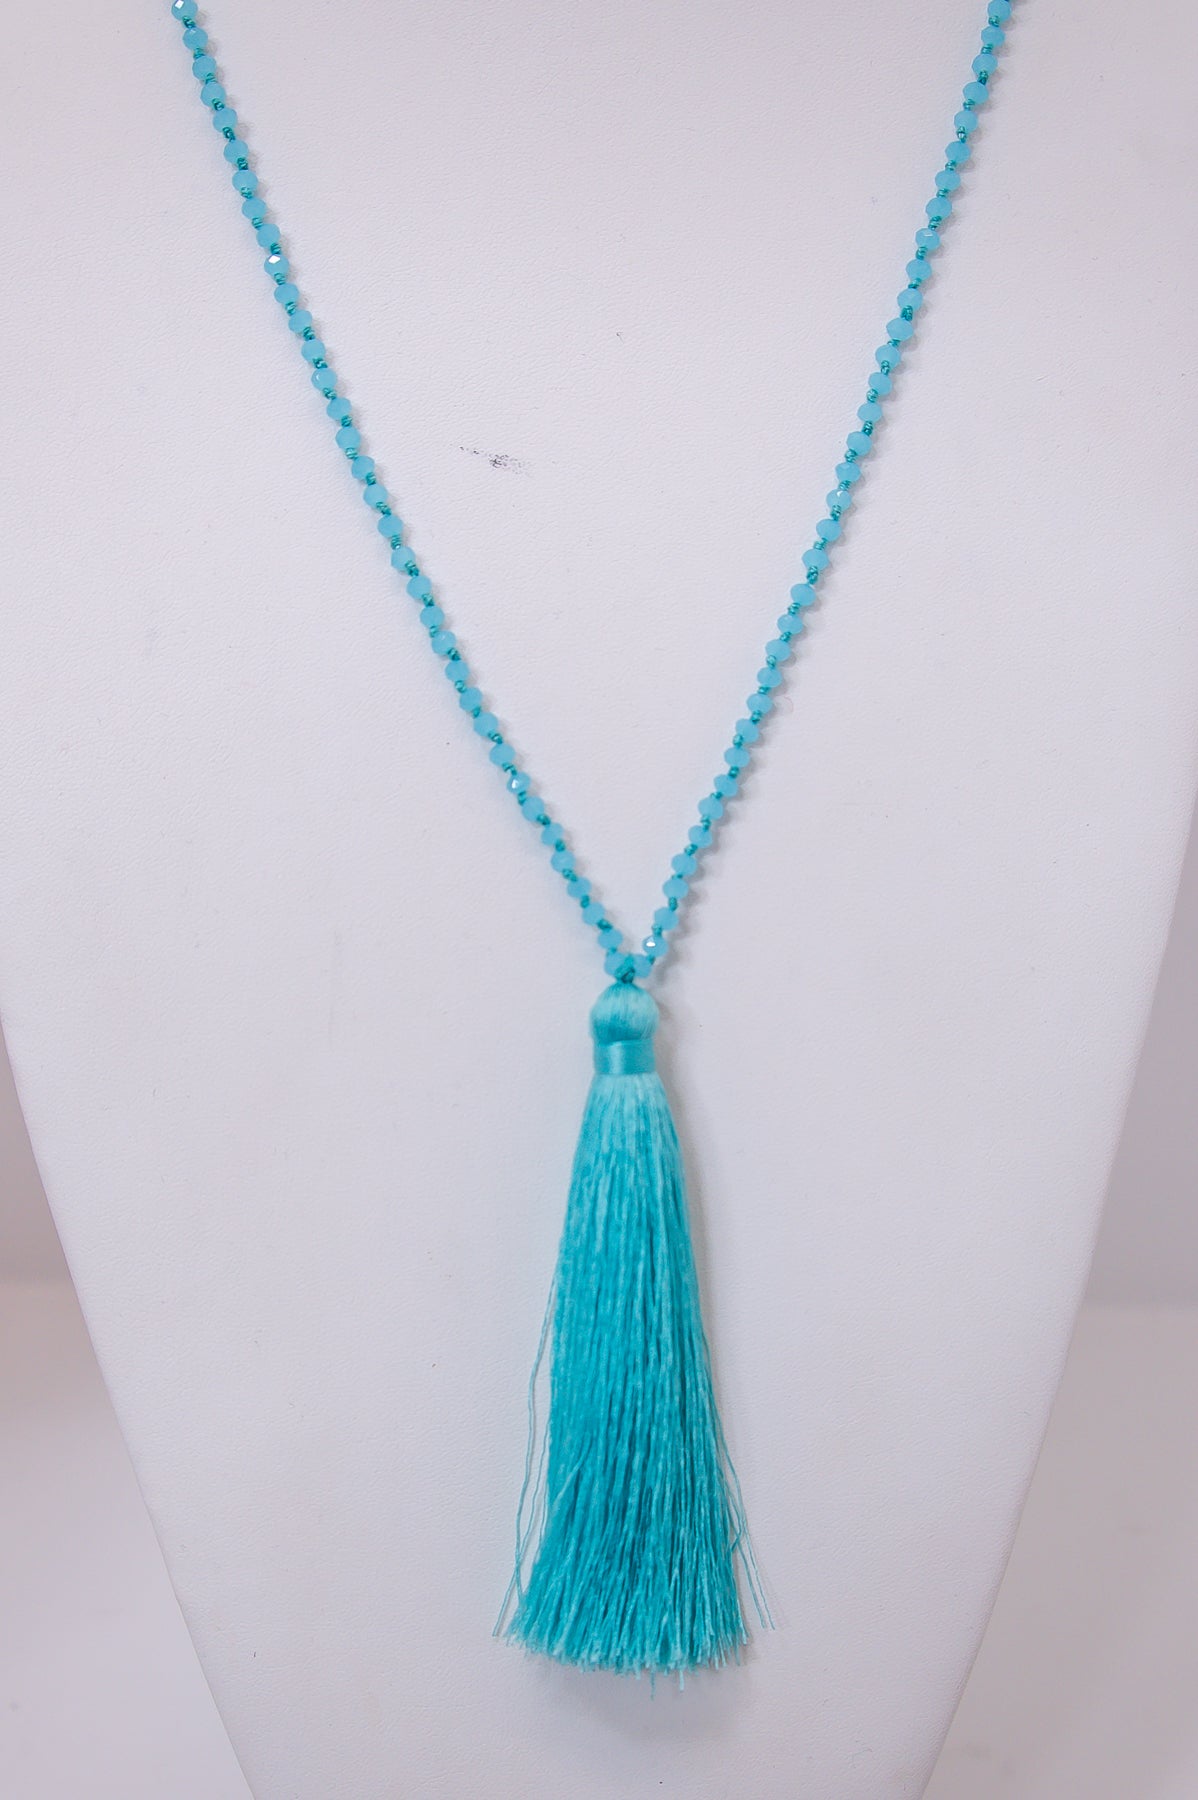 Turquoise Beaded/Tassel Necklace - NEK4255TU